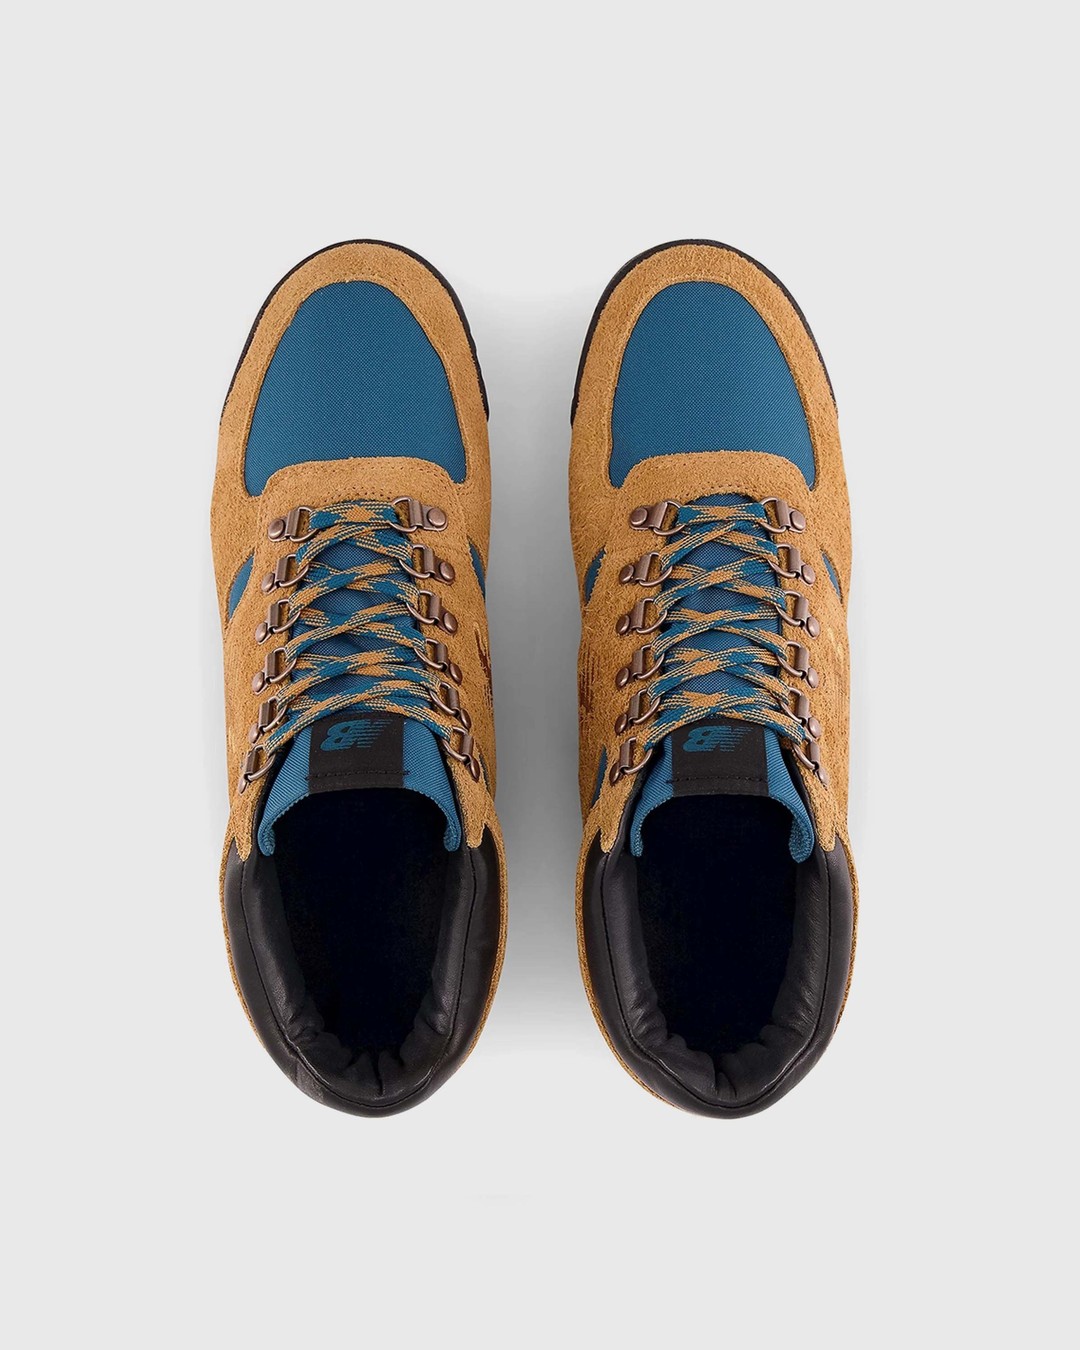 New Balance – URAINAA Tan - Hiking Boots - Brown - Image 5